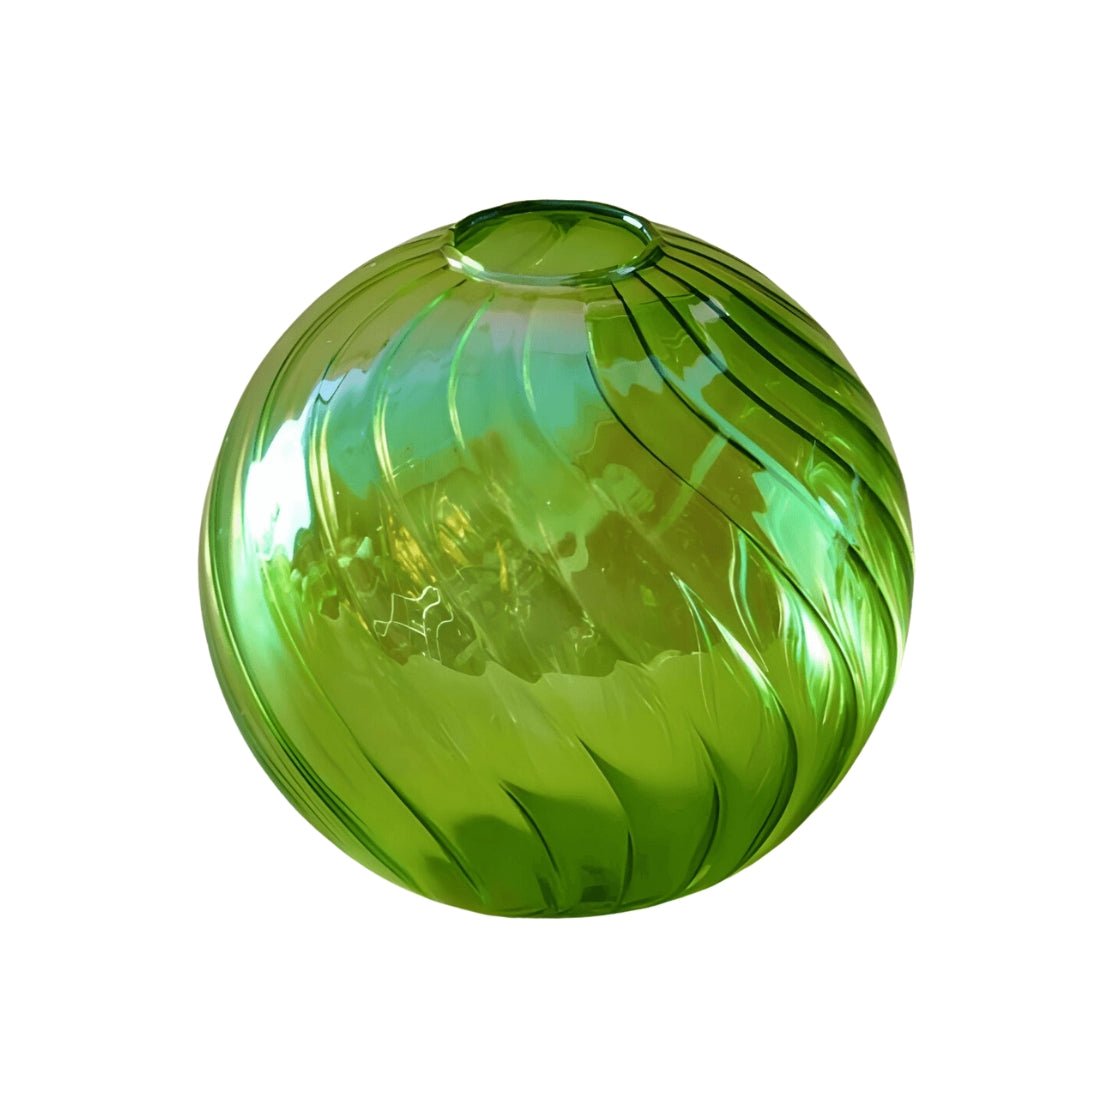 Green, shiny ball glass vase